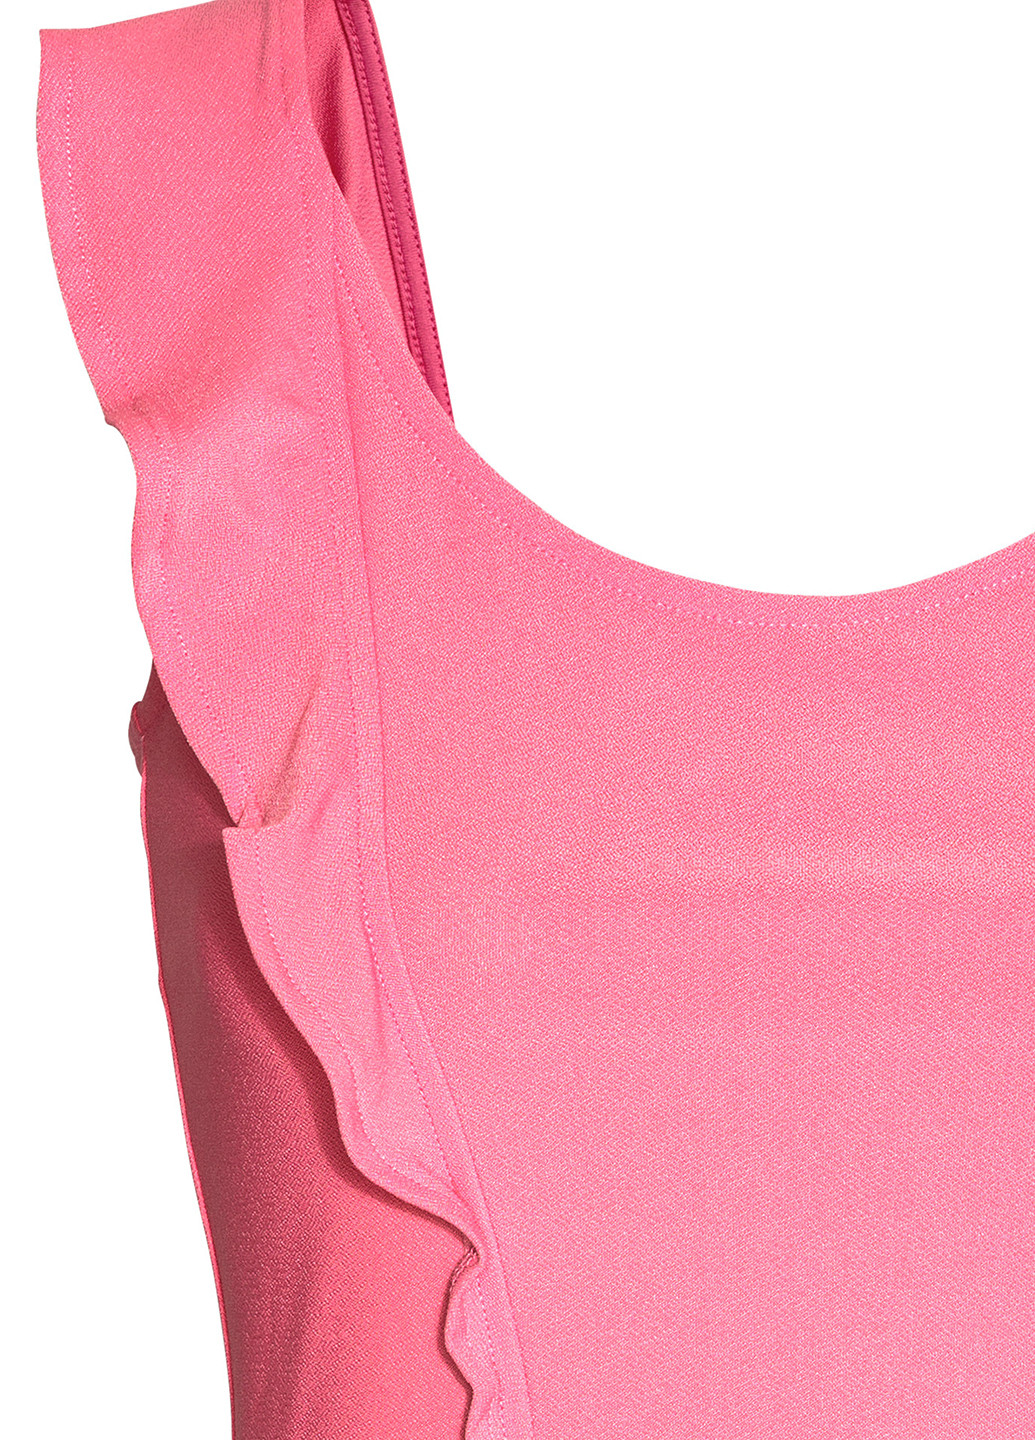 Комбинезон H&M комбинезон-шорты розовый кэжуал полиэстер